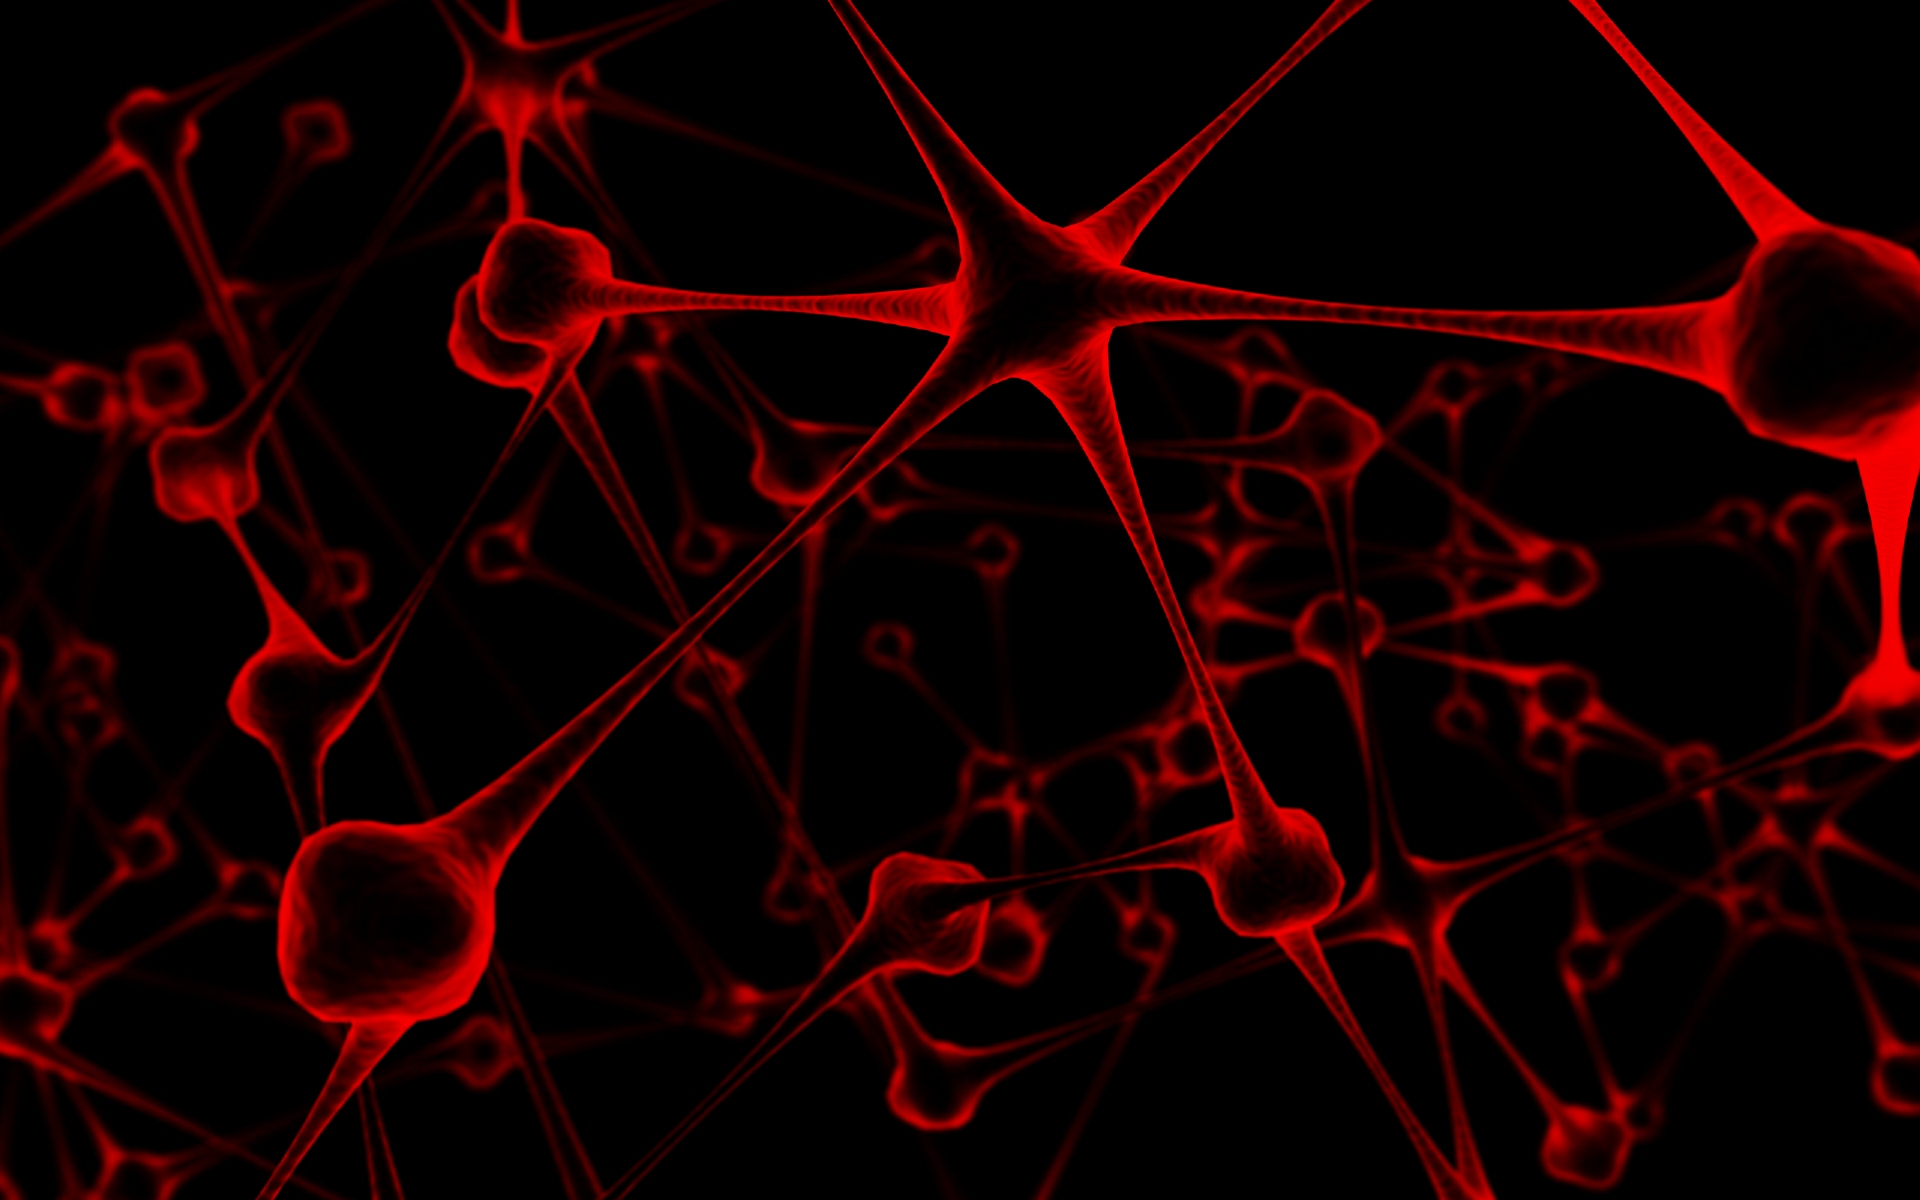 Abstract Neurons Red Black Digital Art 1920x1200